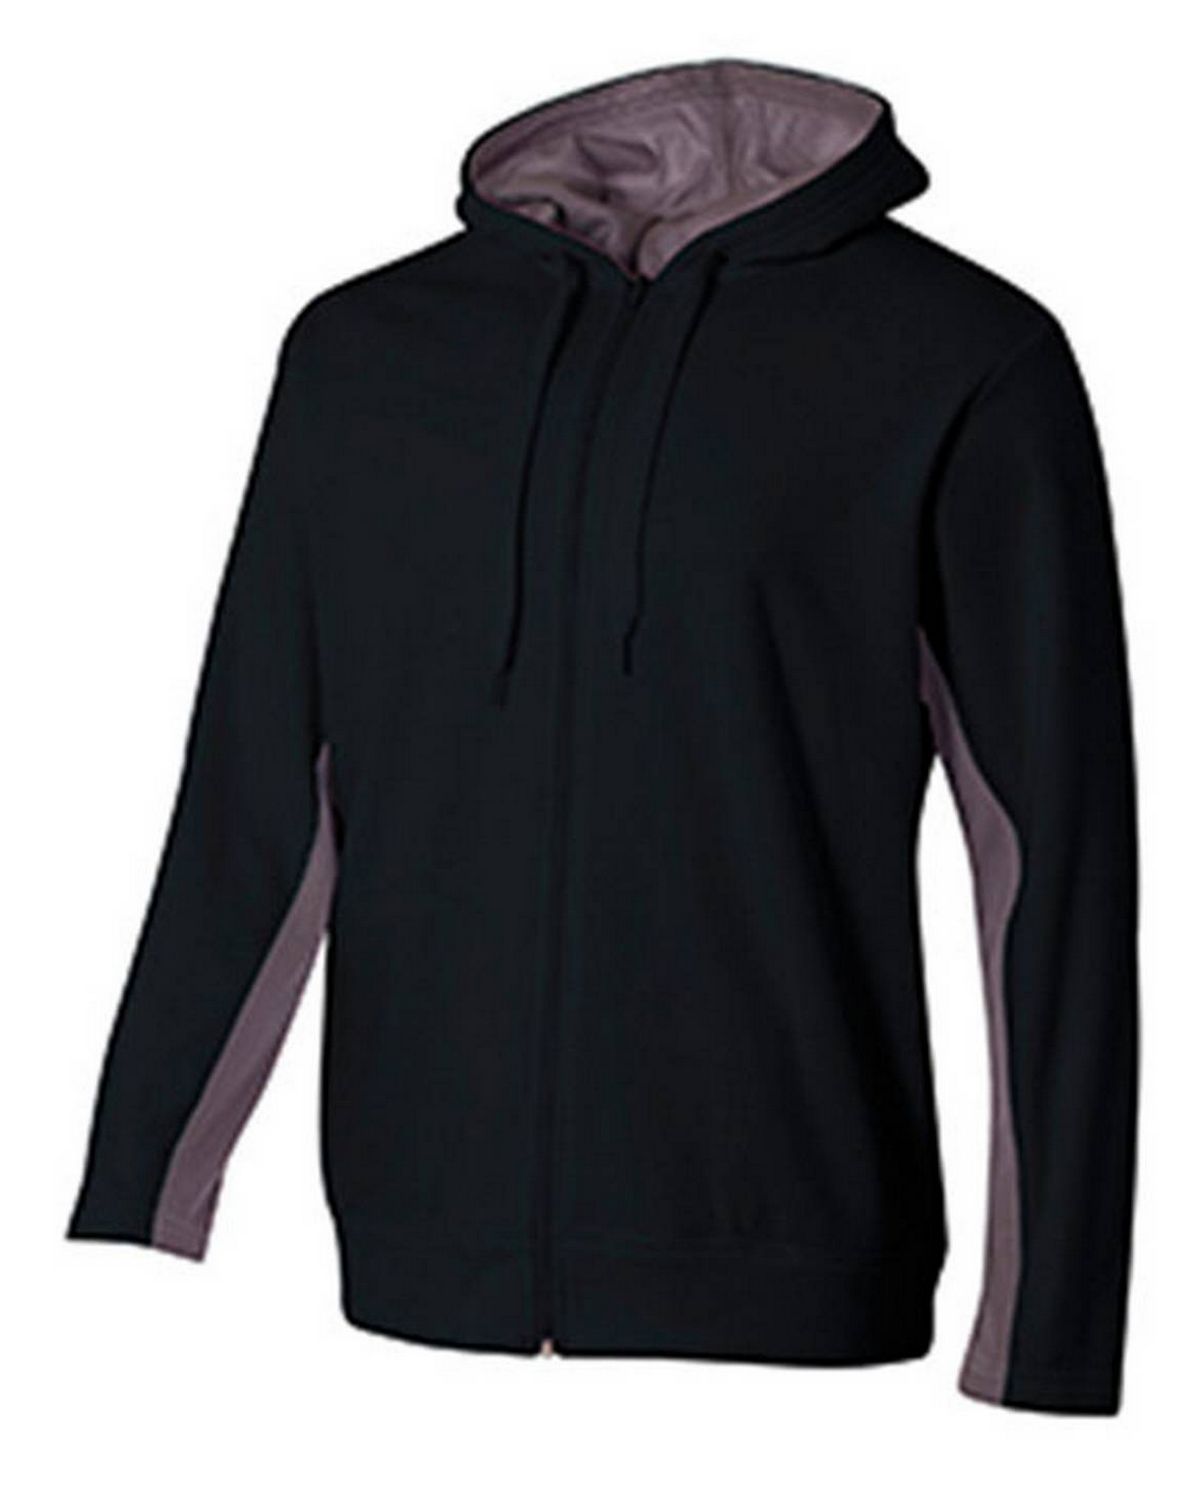 A4 NB4251 Youth Tech Fleece Full-Zip Hooded Sweatshirt